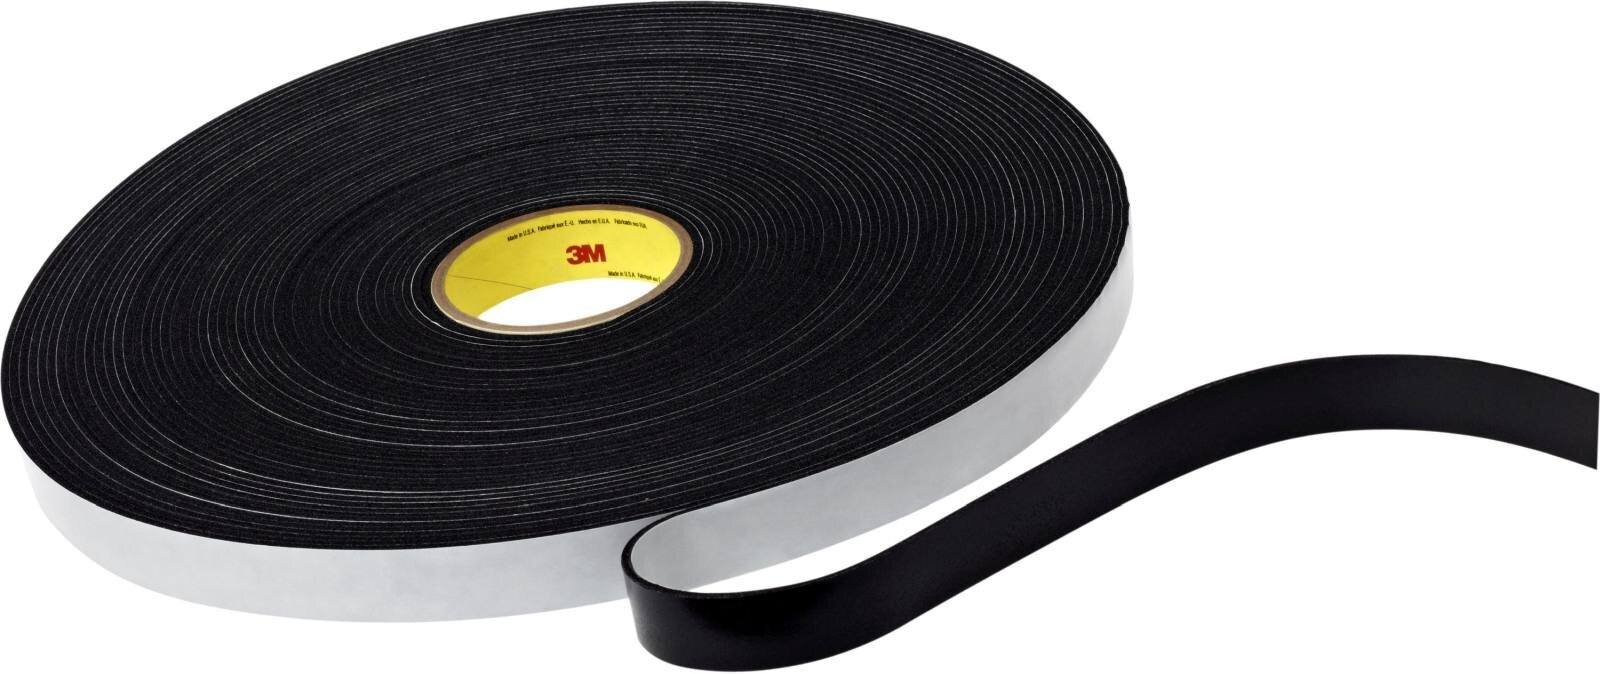 3M Single-sided vinyl foam adhesive tape 4508, black, 6 mm x 33 m, 3.2 mm